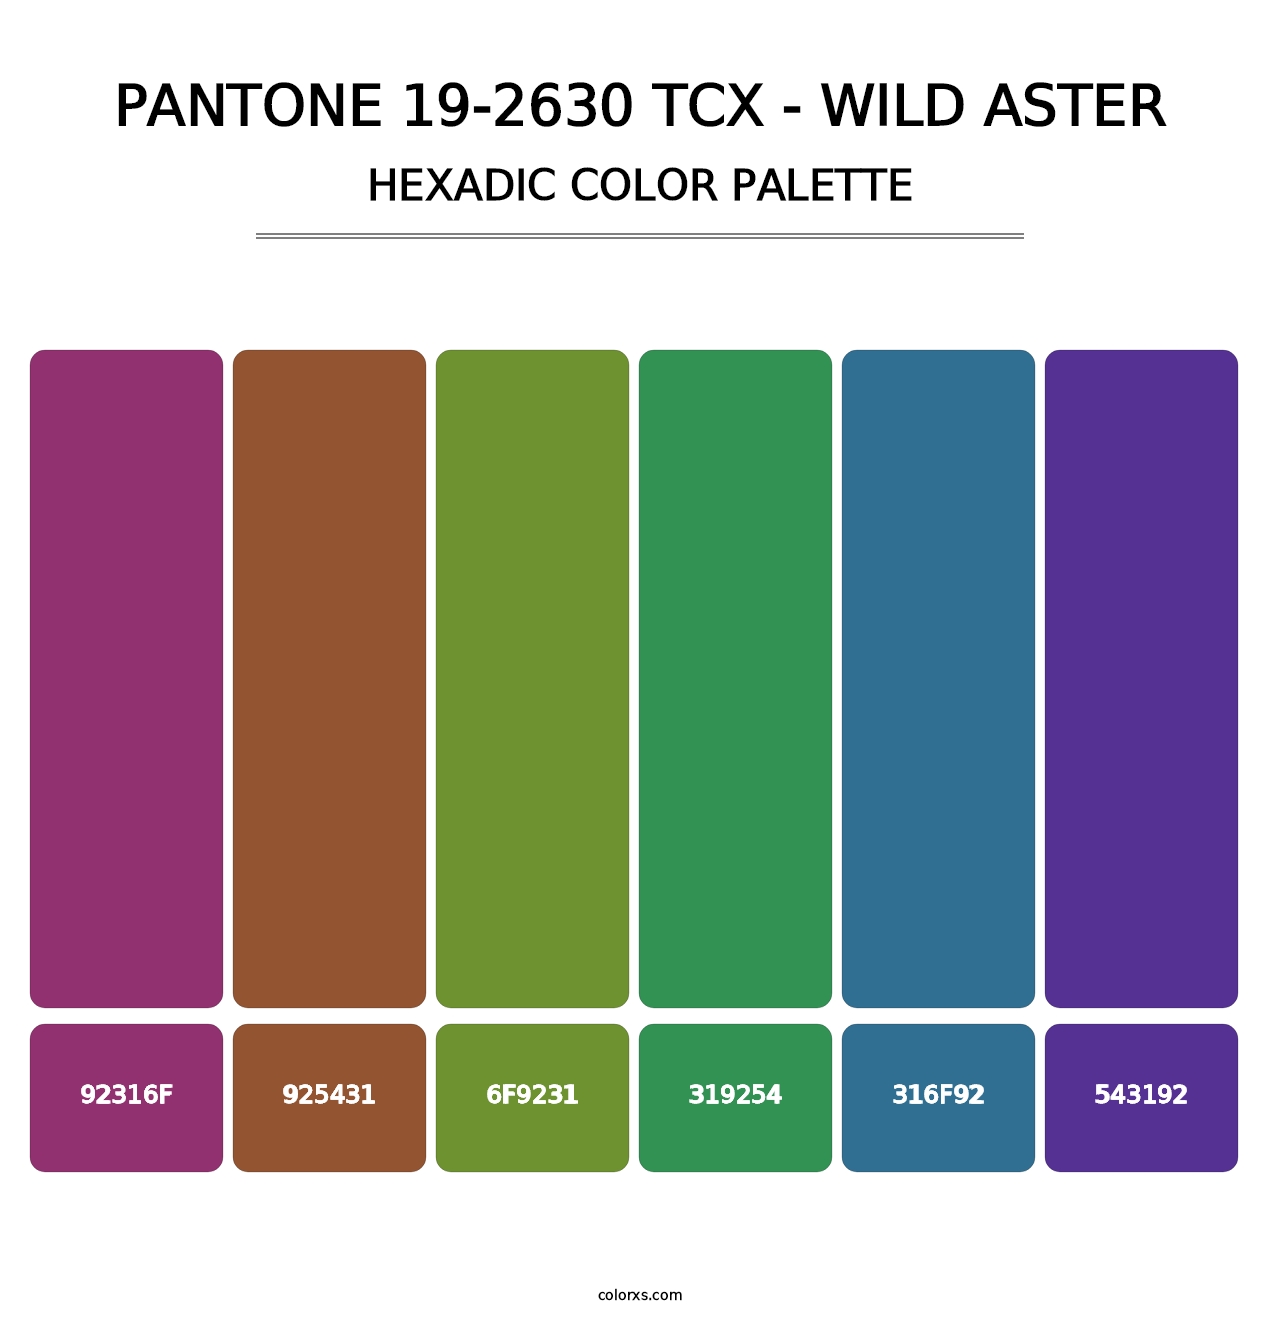 PANTONE 19-2630 TCX - Wild Aster - Hexadic Color Palette